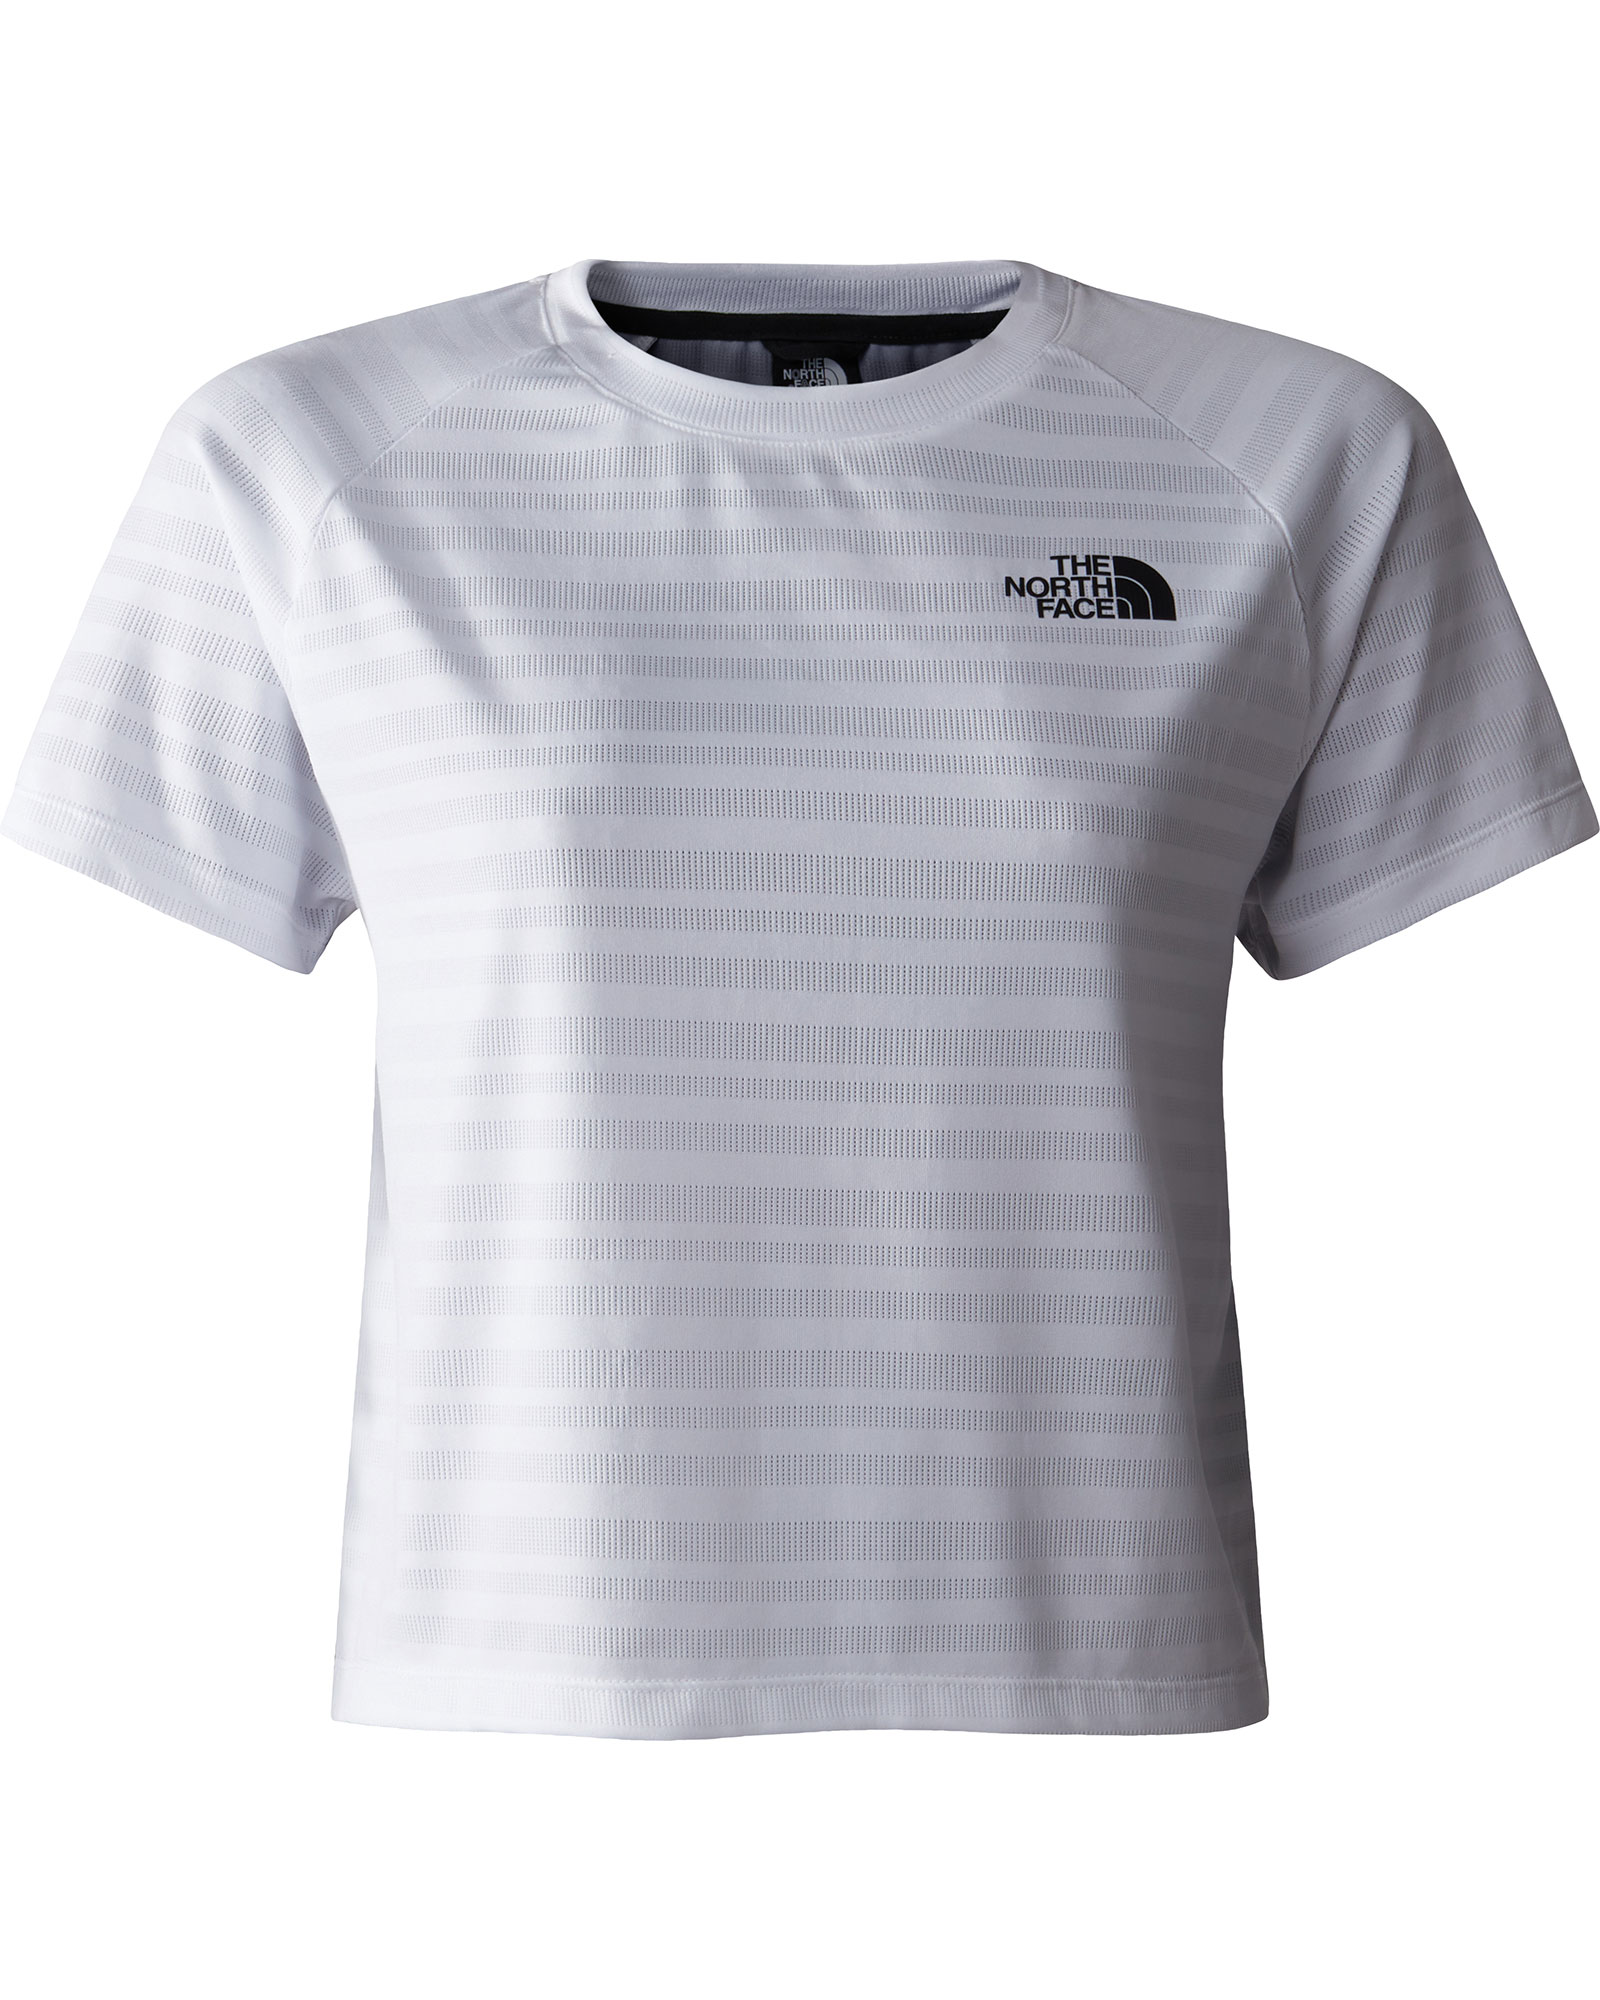 The North Face Women’s MA T Shirt - TNF White-Asphalt Grey XS